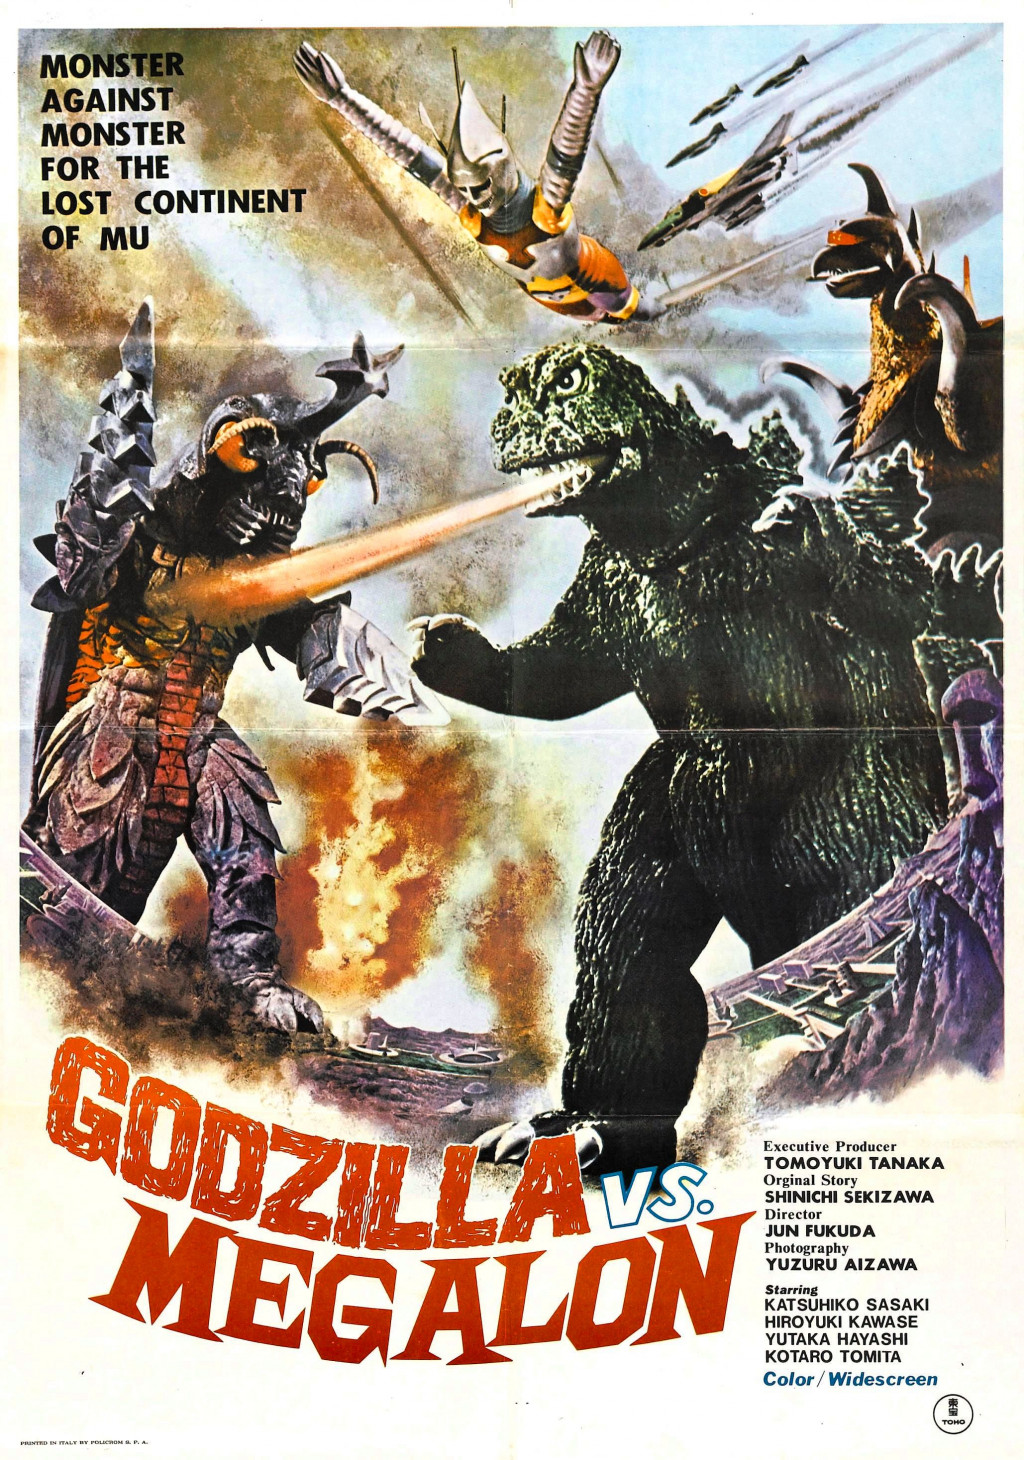 Top 5 Godzilla Movies to Watch Before the New Godzilla Movie | hubpages